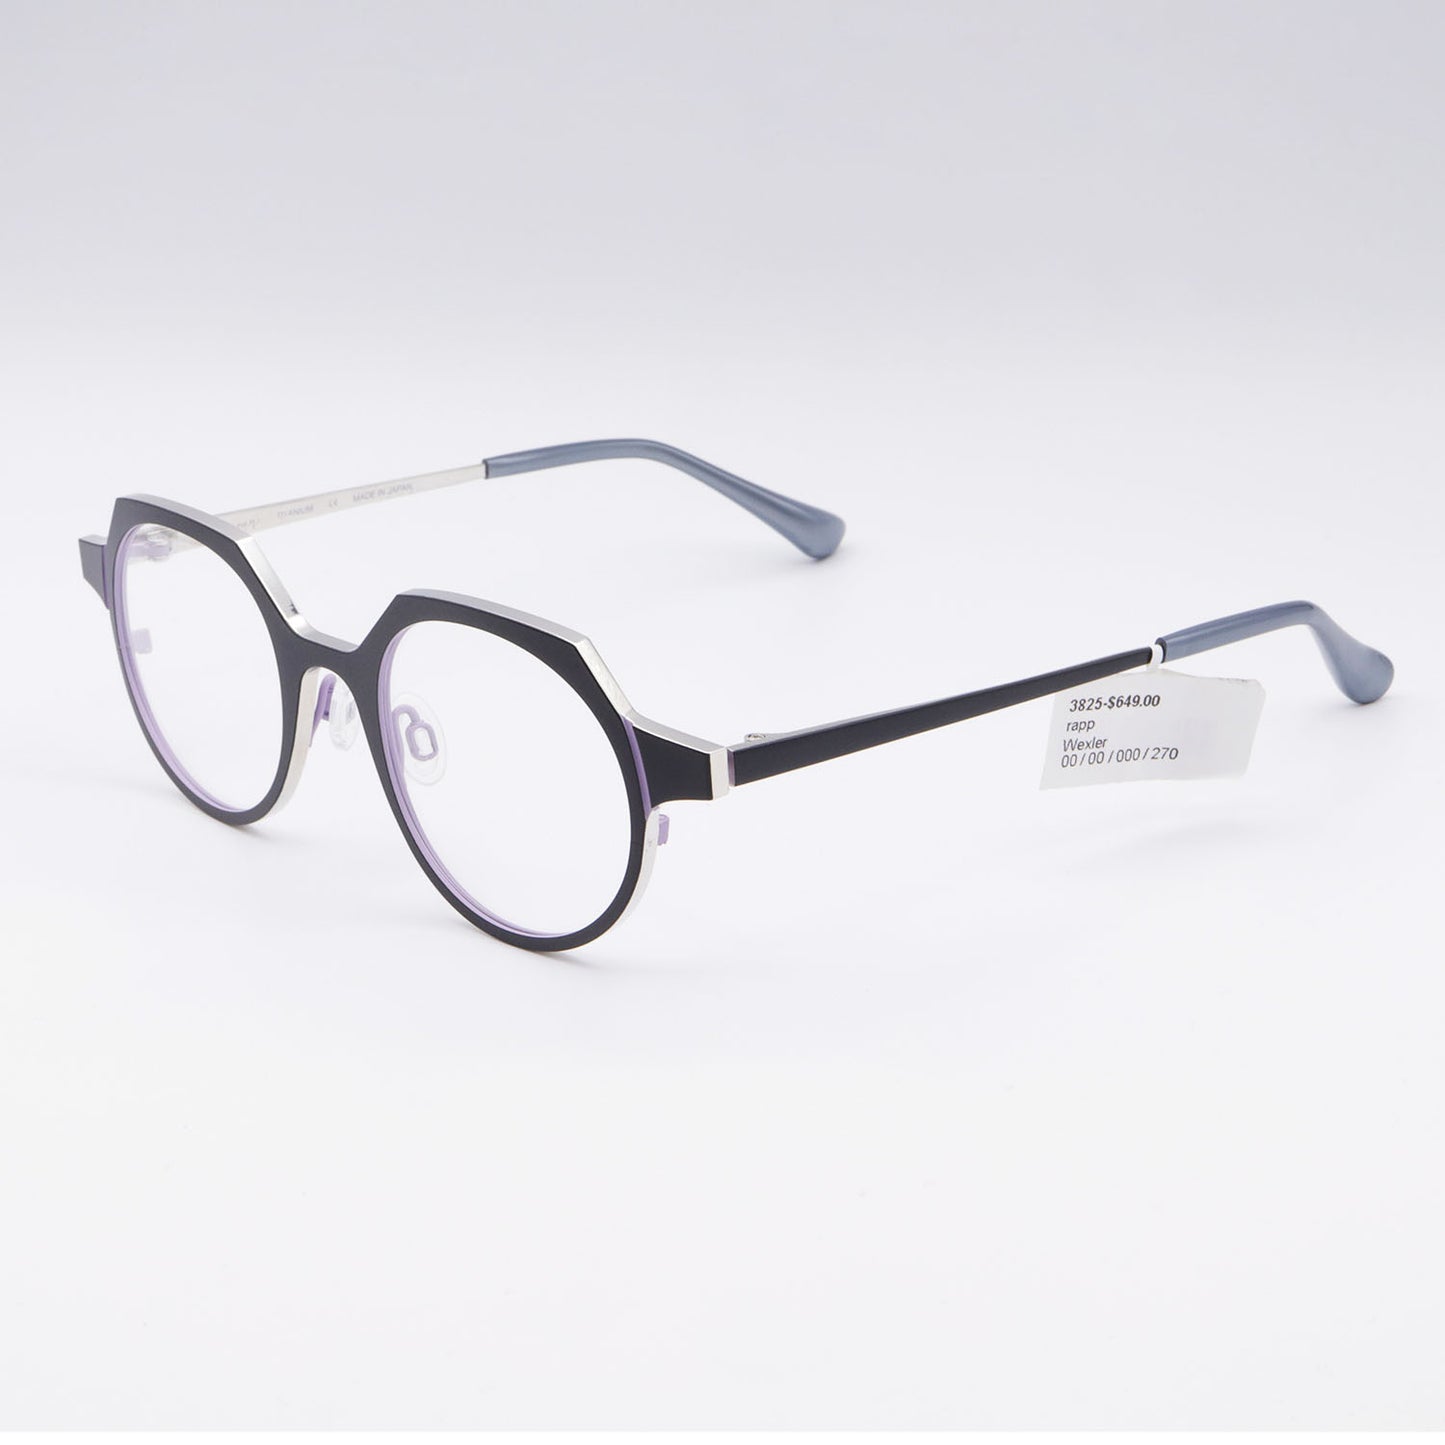 Wexler Rapp Black and Purple Frames Glasses